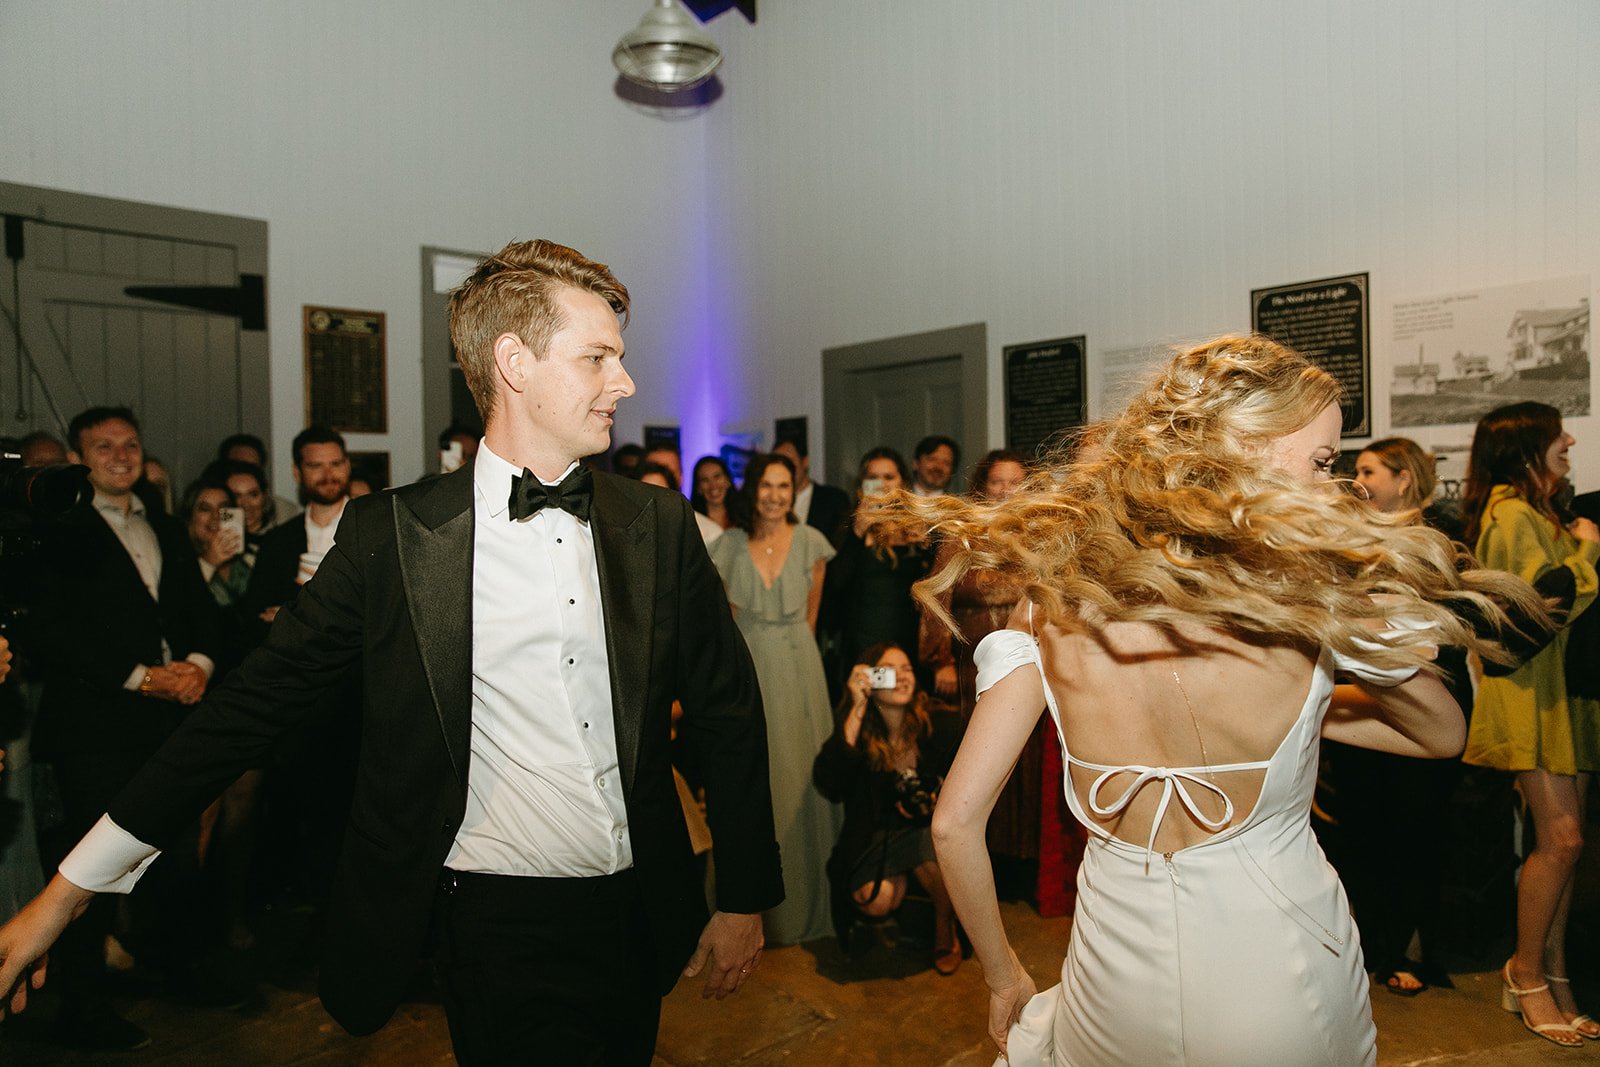 Bride and groom dancing on the dance floor during wedding reception